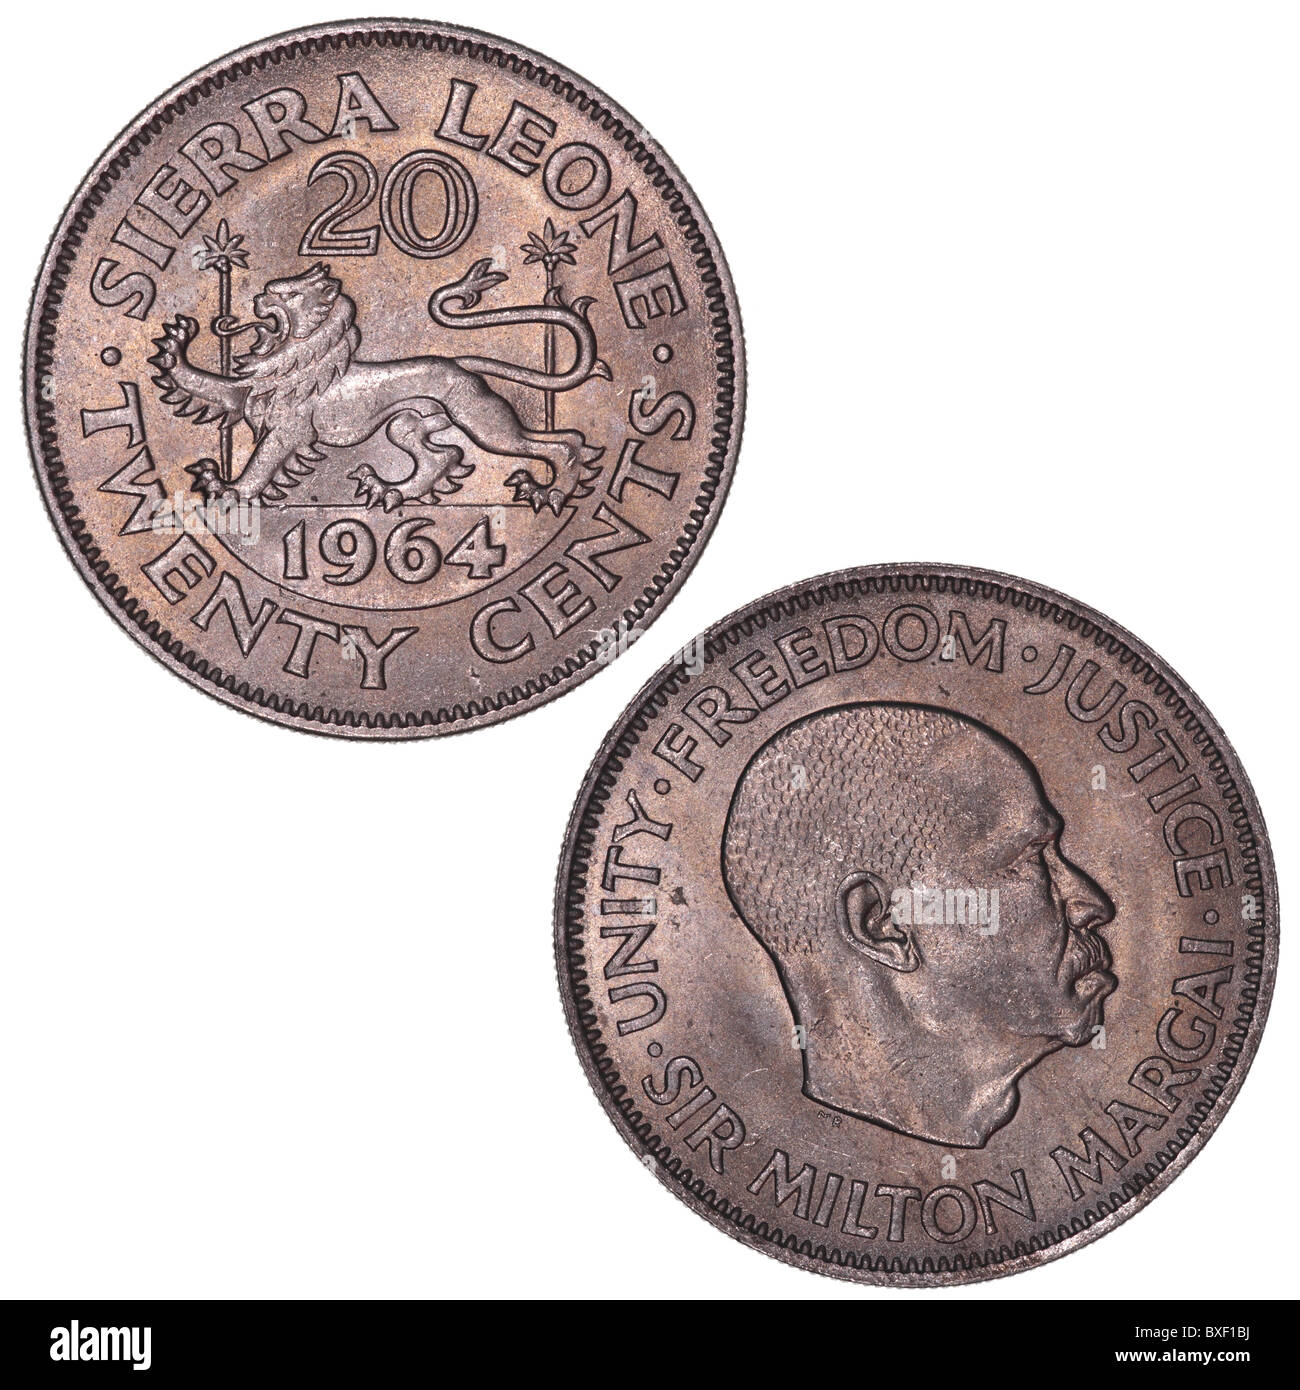 Sierra Leone 20 cent coin (1964). The reverse features a lion passant. The obverse features a portrait of Sir Milton Margai (1895-1964) Stock Photo